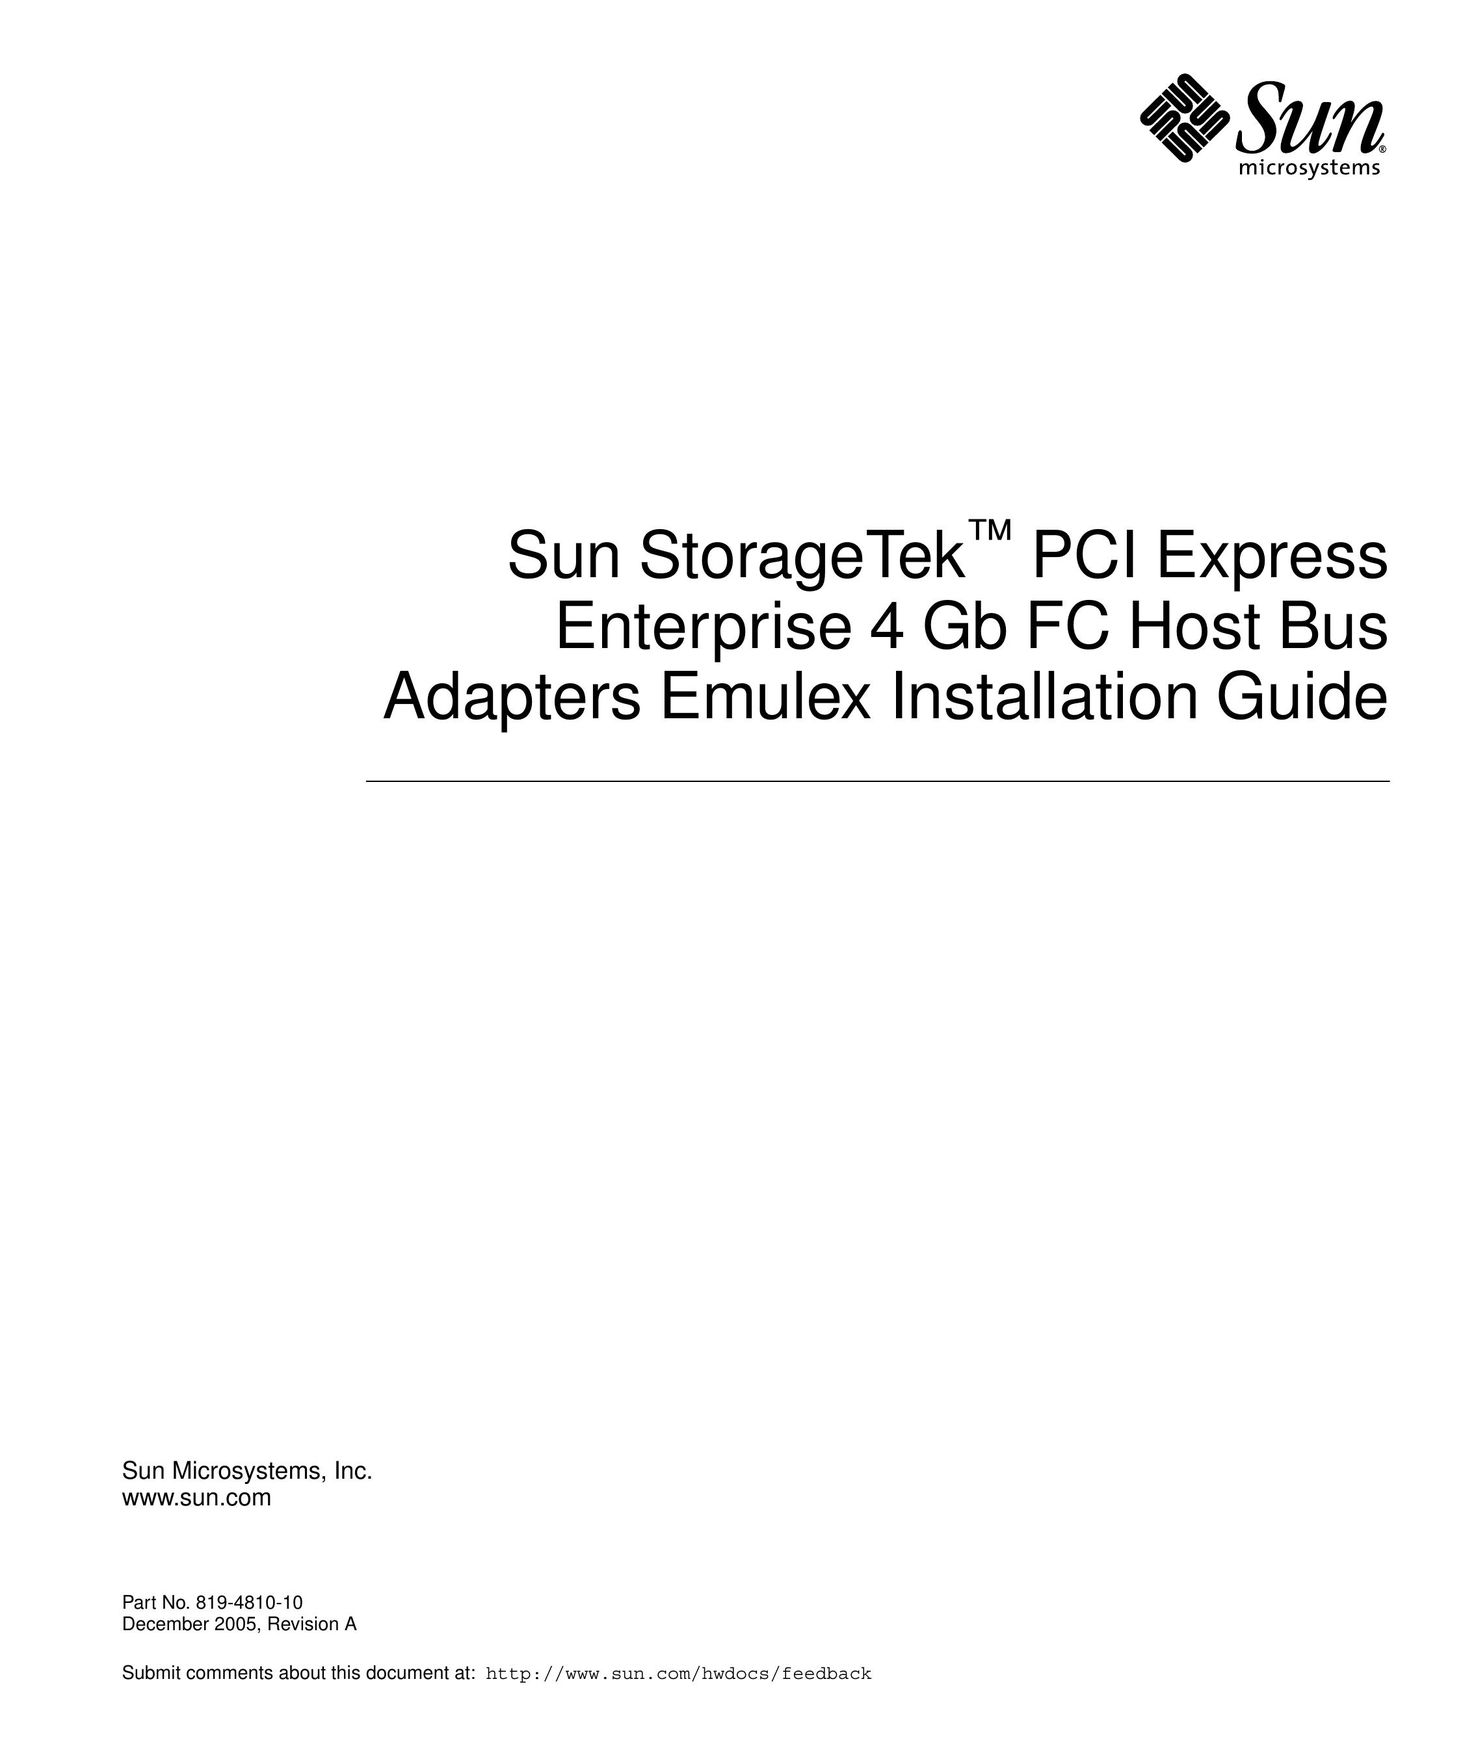 Emulex 4 Gb FC Host Bus Network Card User Manual